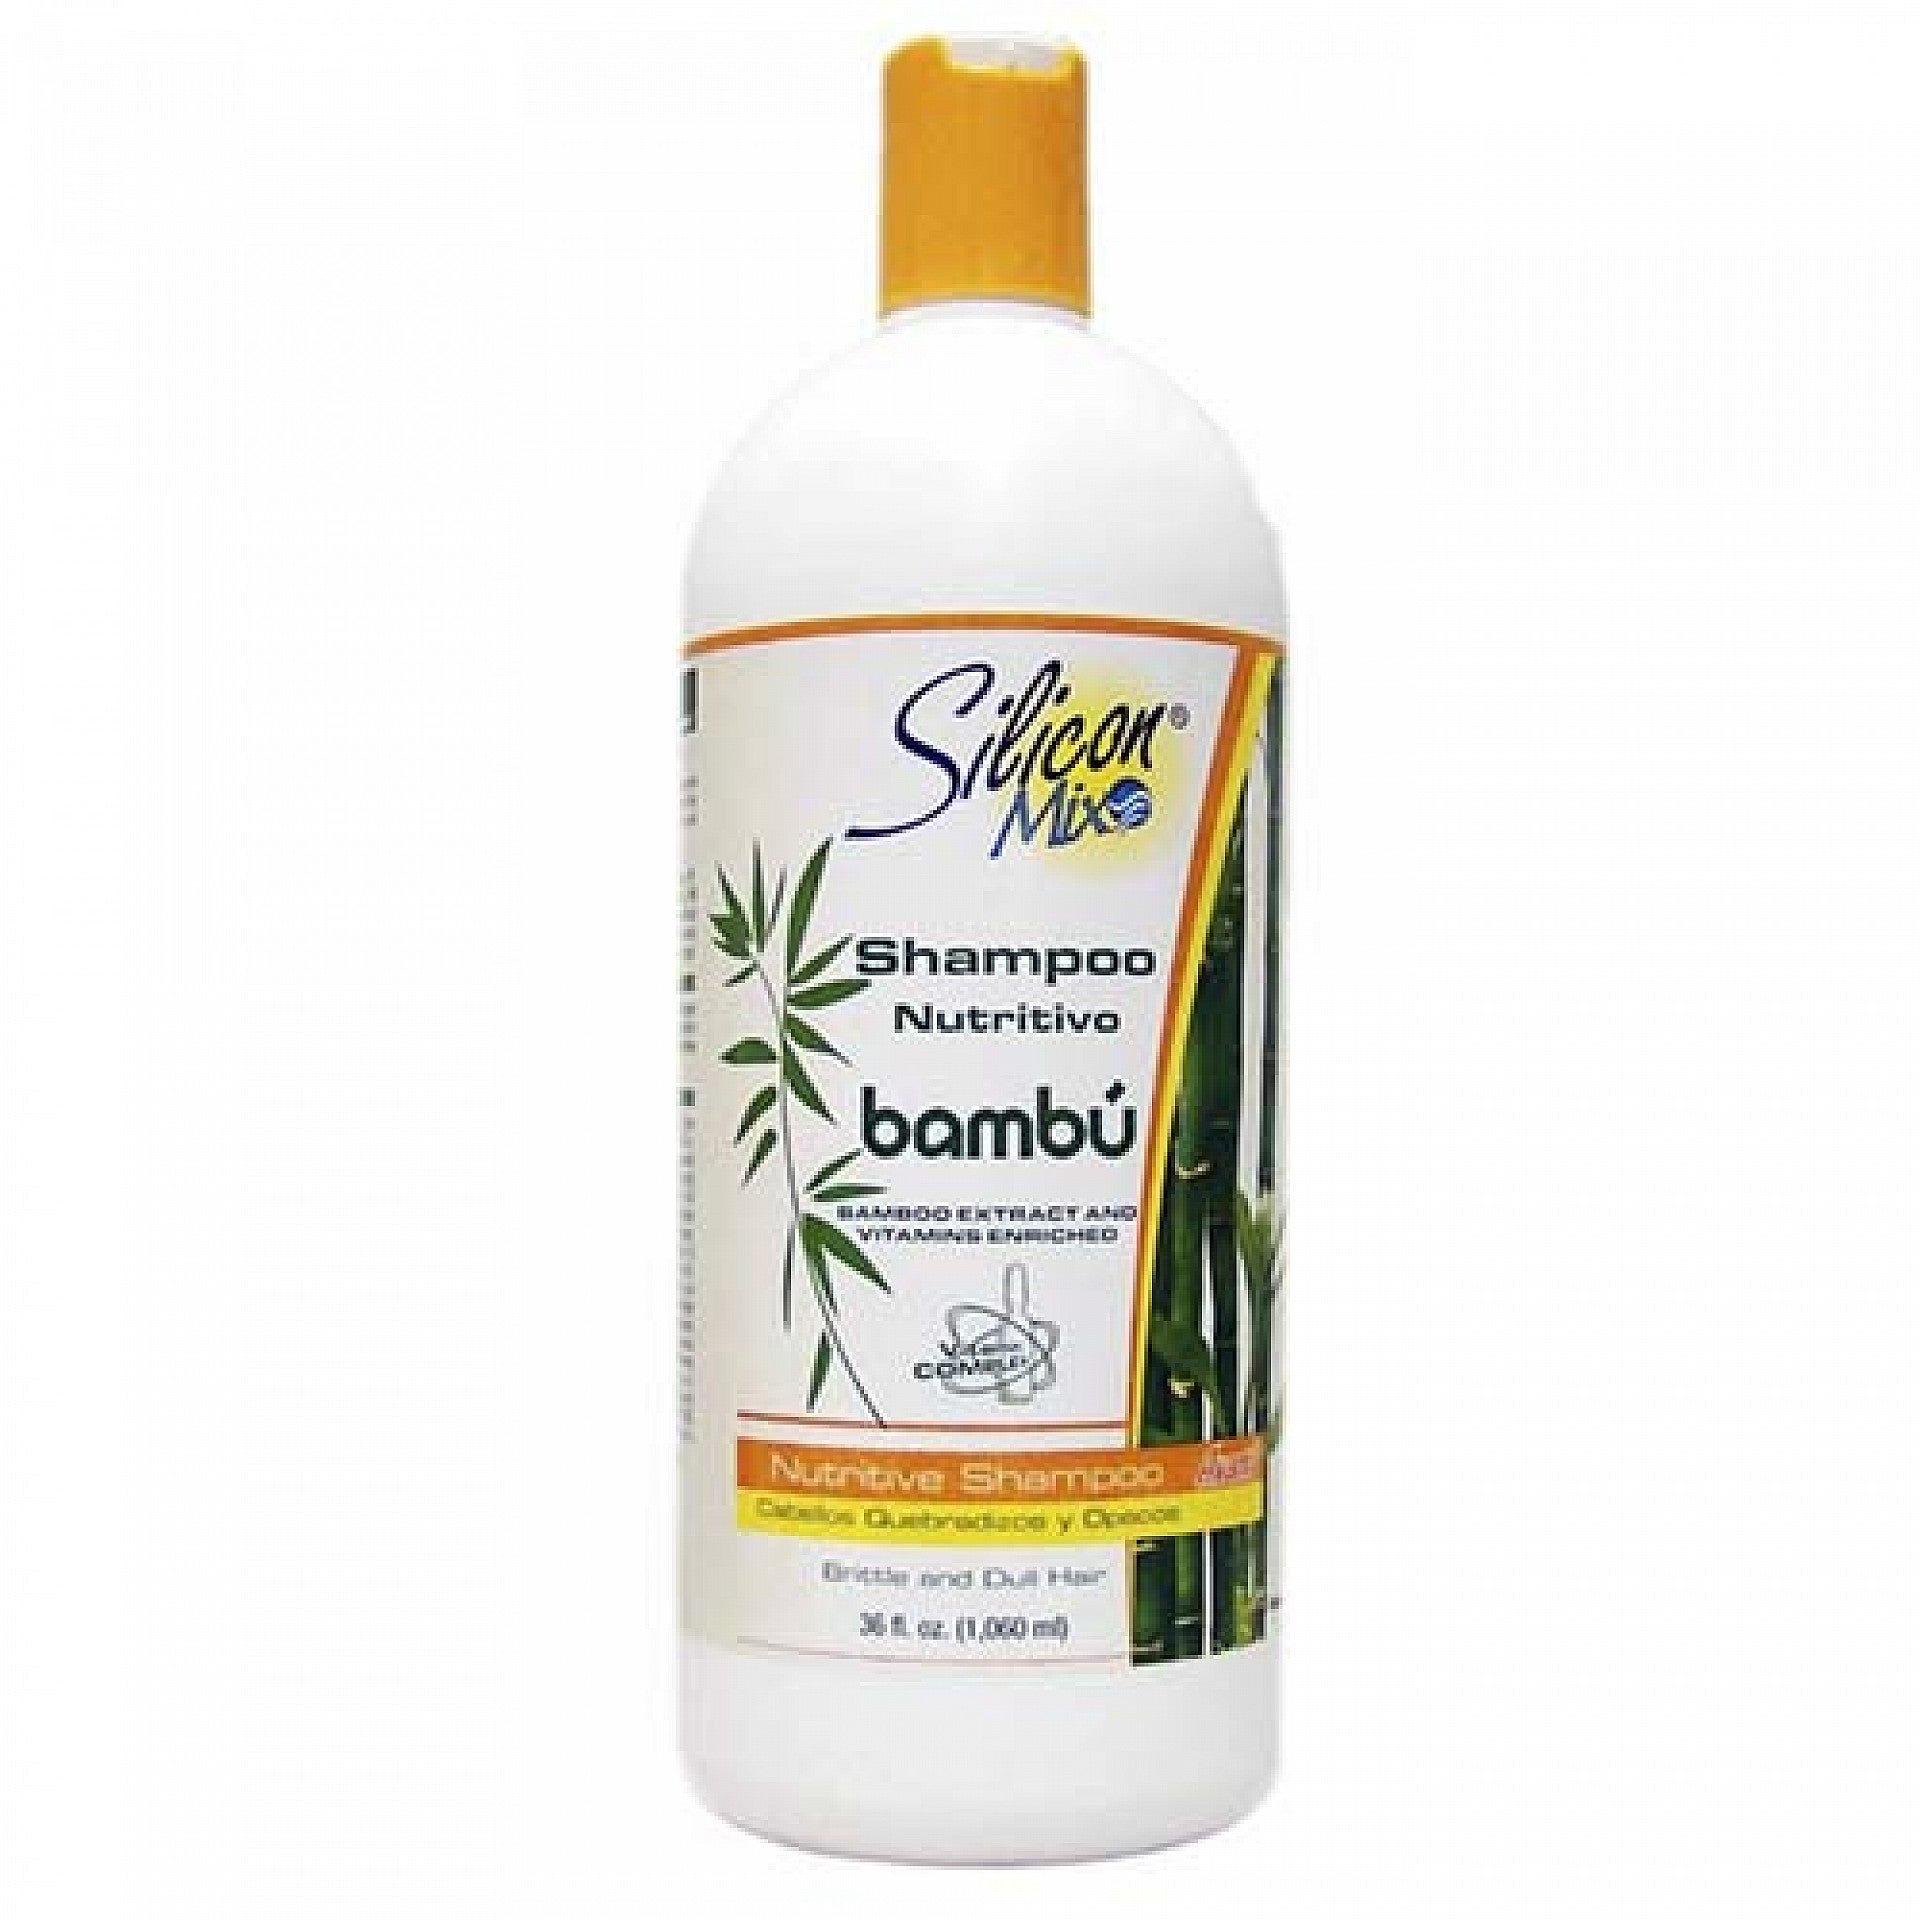 Silicon Mix Shampoo Nutrivio Bambú 36 fl.oz